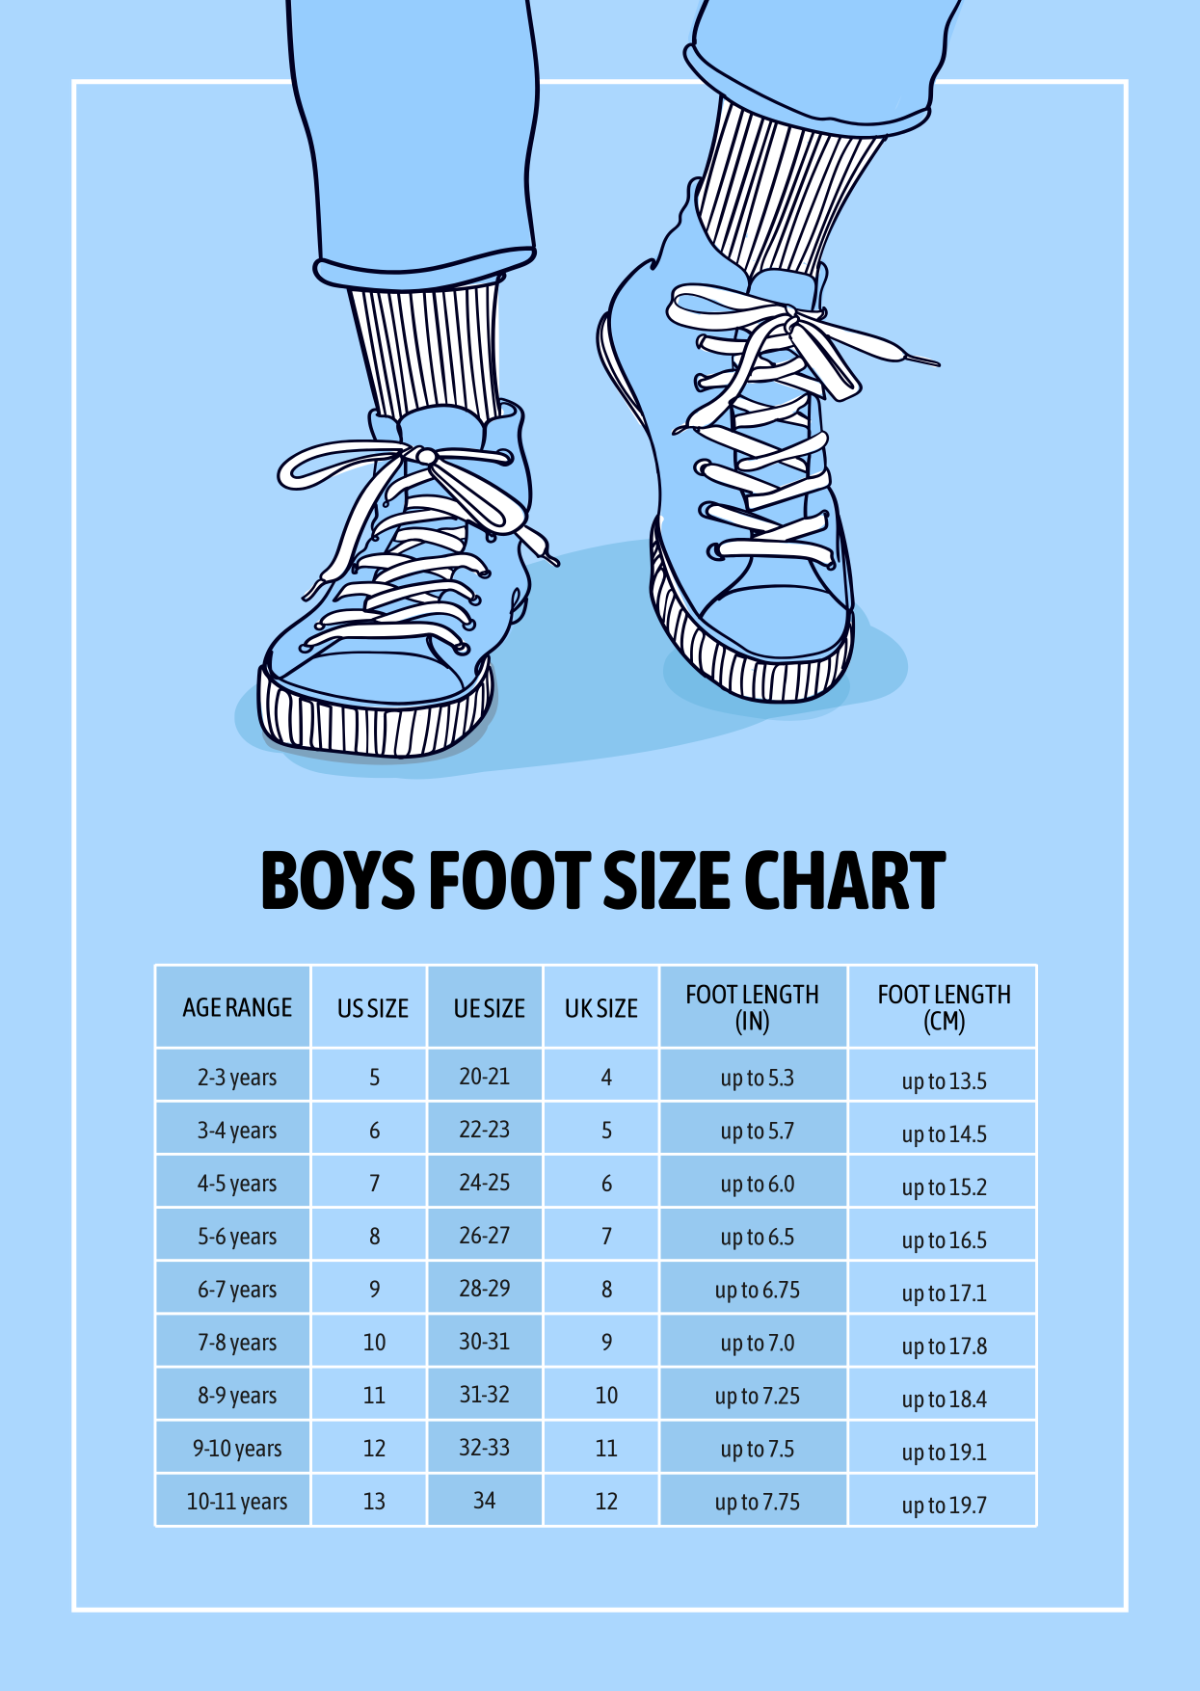 Boys Foot Size Chart